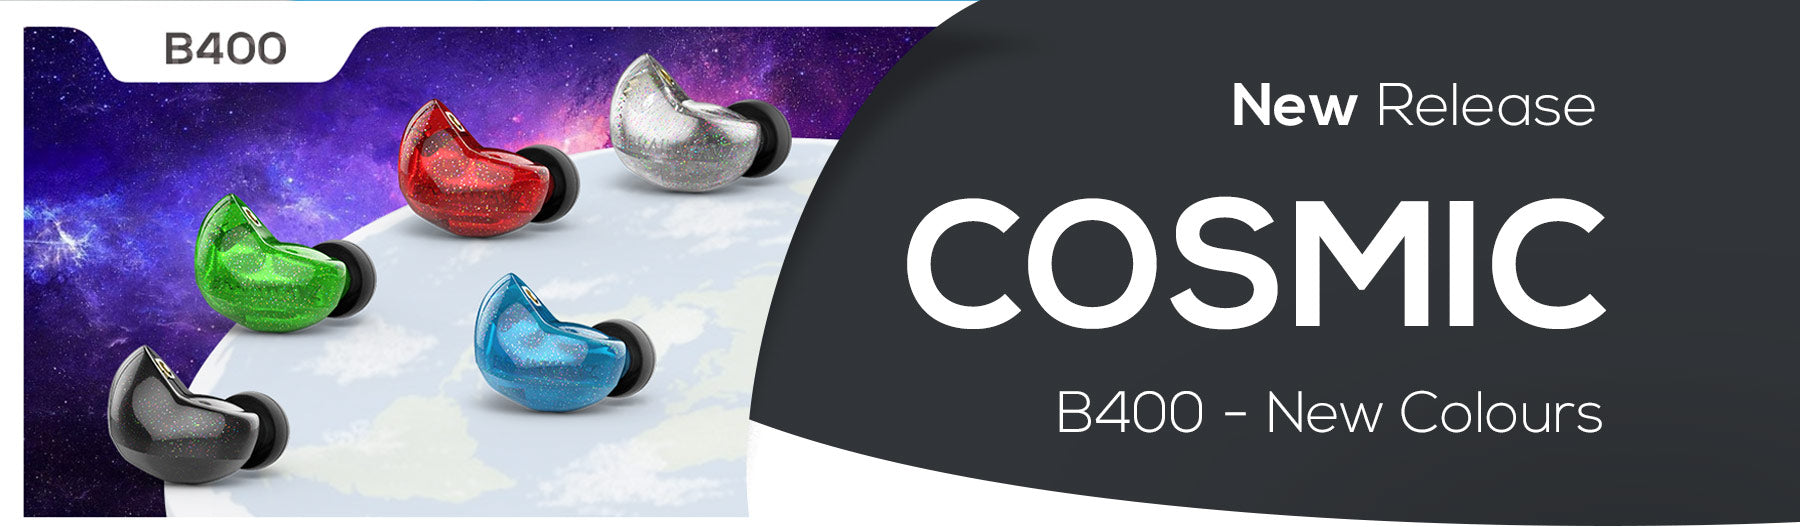 B400 - New Cosmic Colours